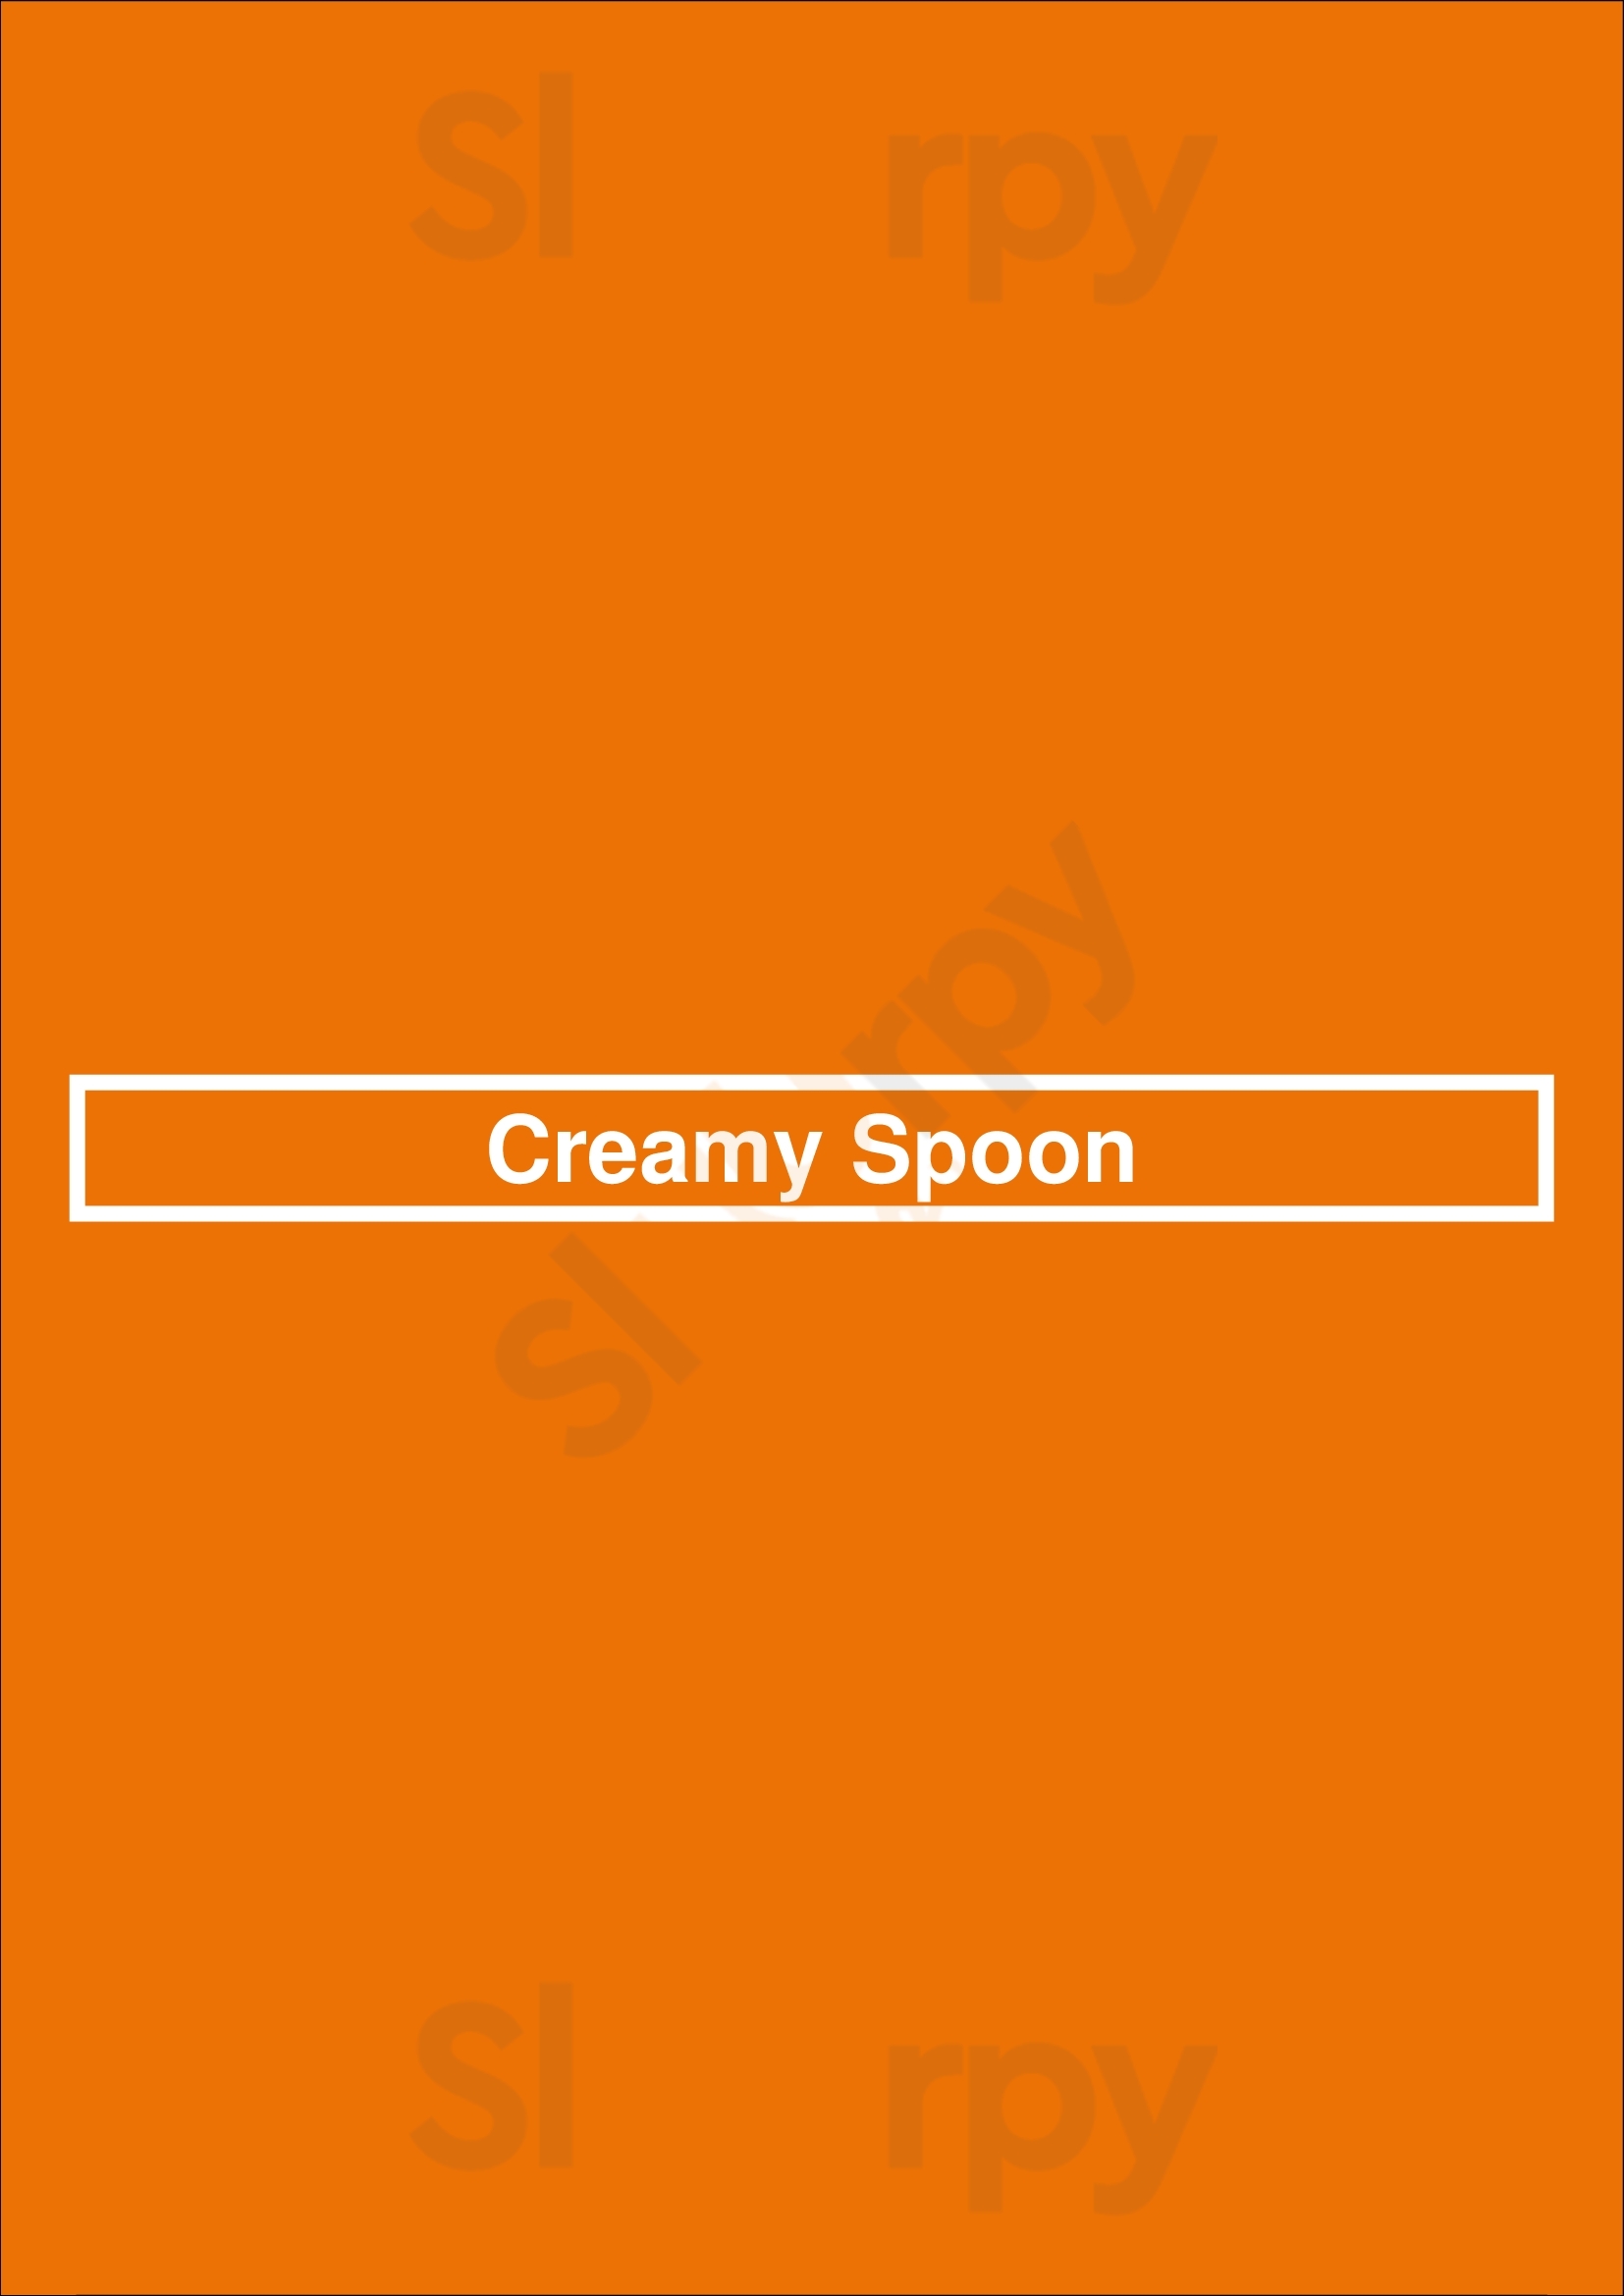 Creamy Spoon Glendale Menu - 1